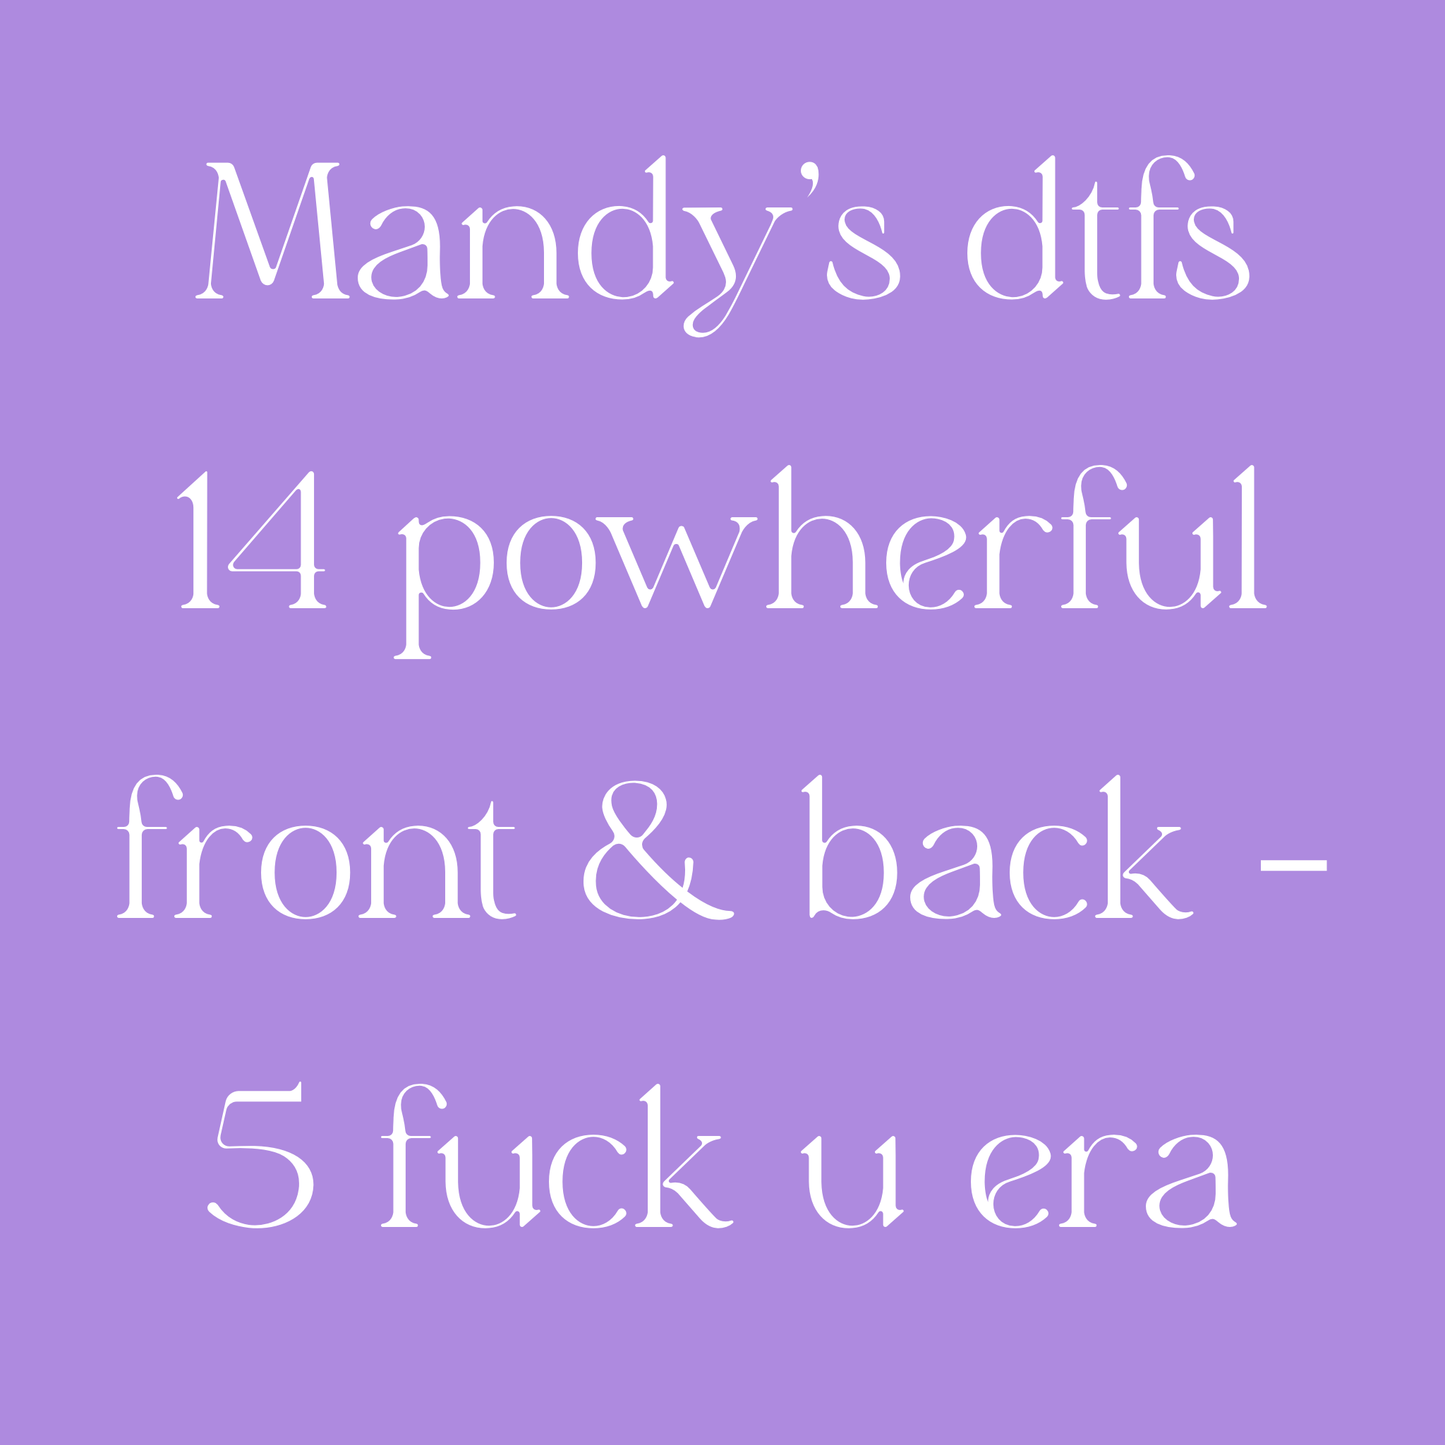 Mandy’s dtfs 14 powherful front & back - 5 fuck u era